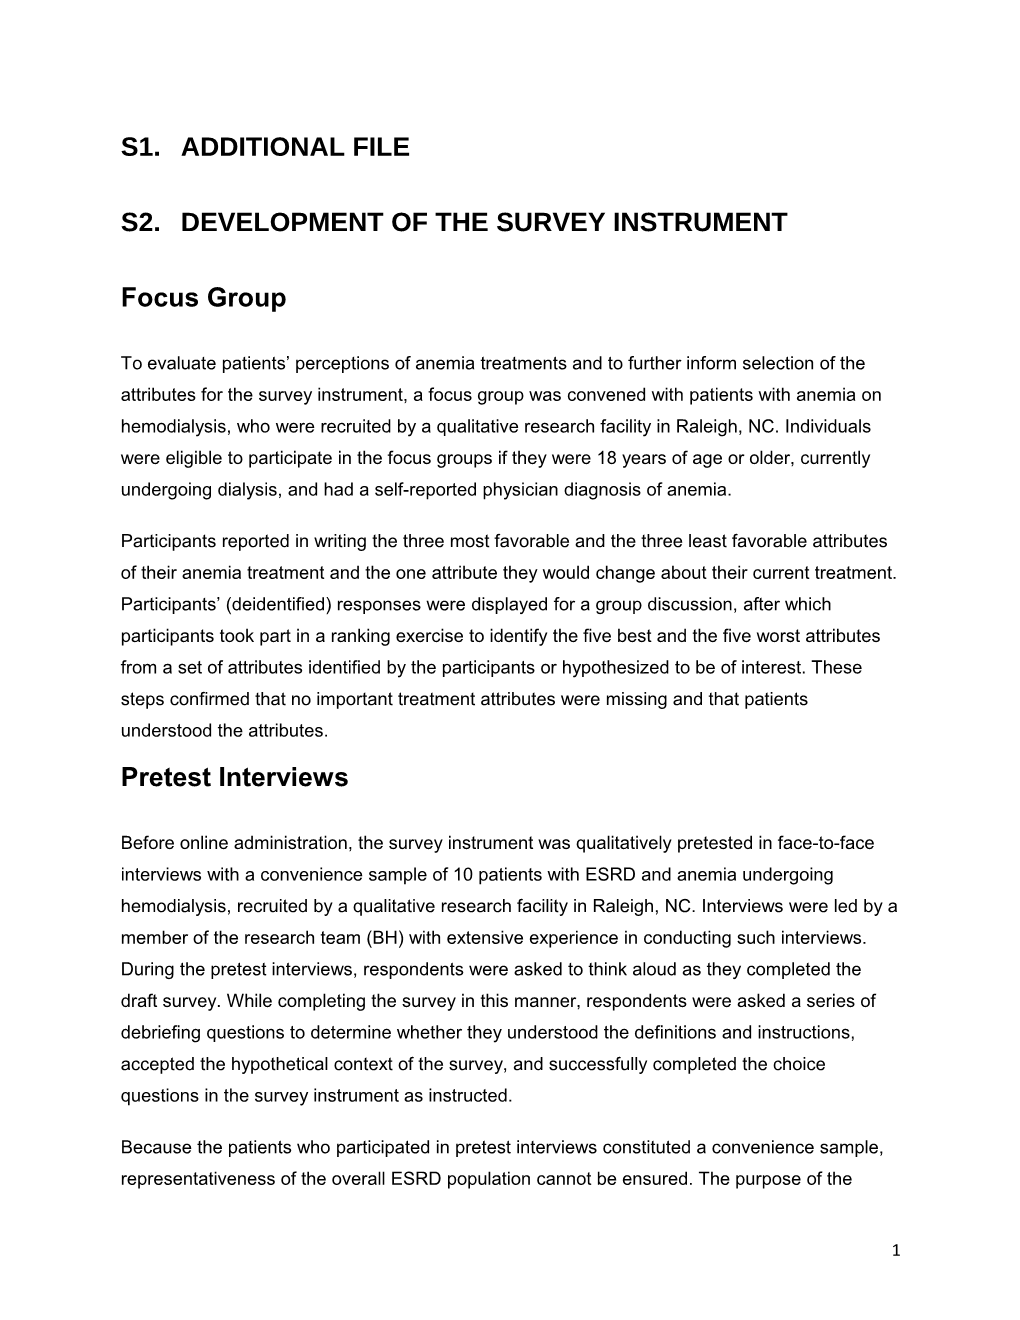 Development of the Survey Instrument